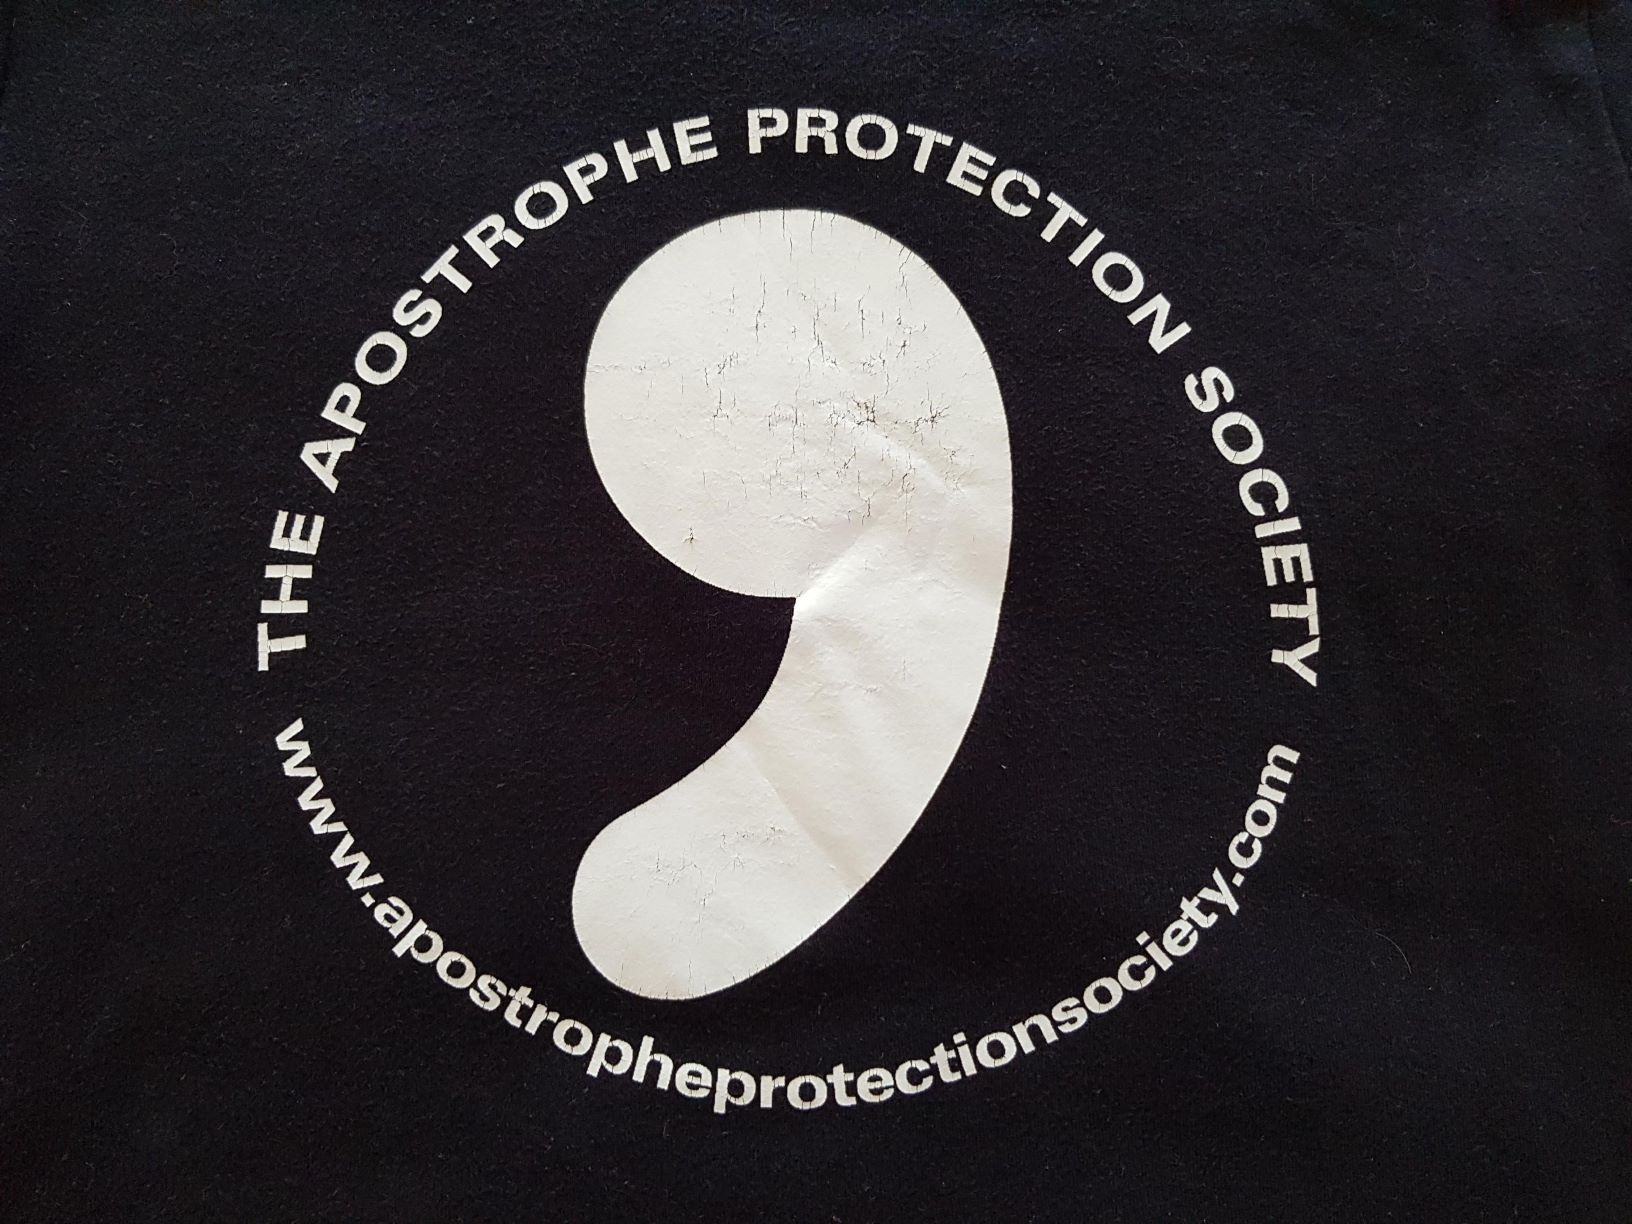 Apostrophe Protection Society t-shirt